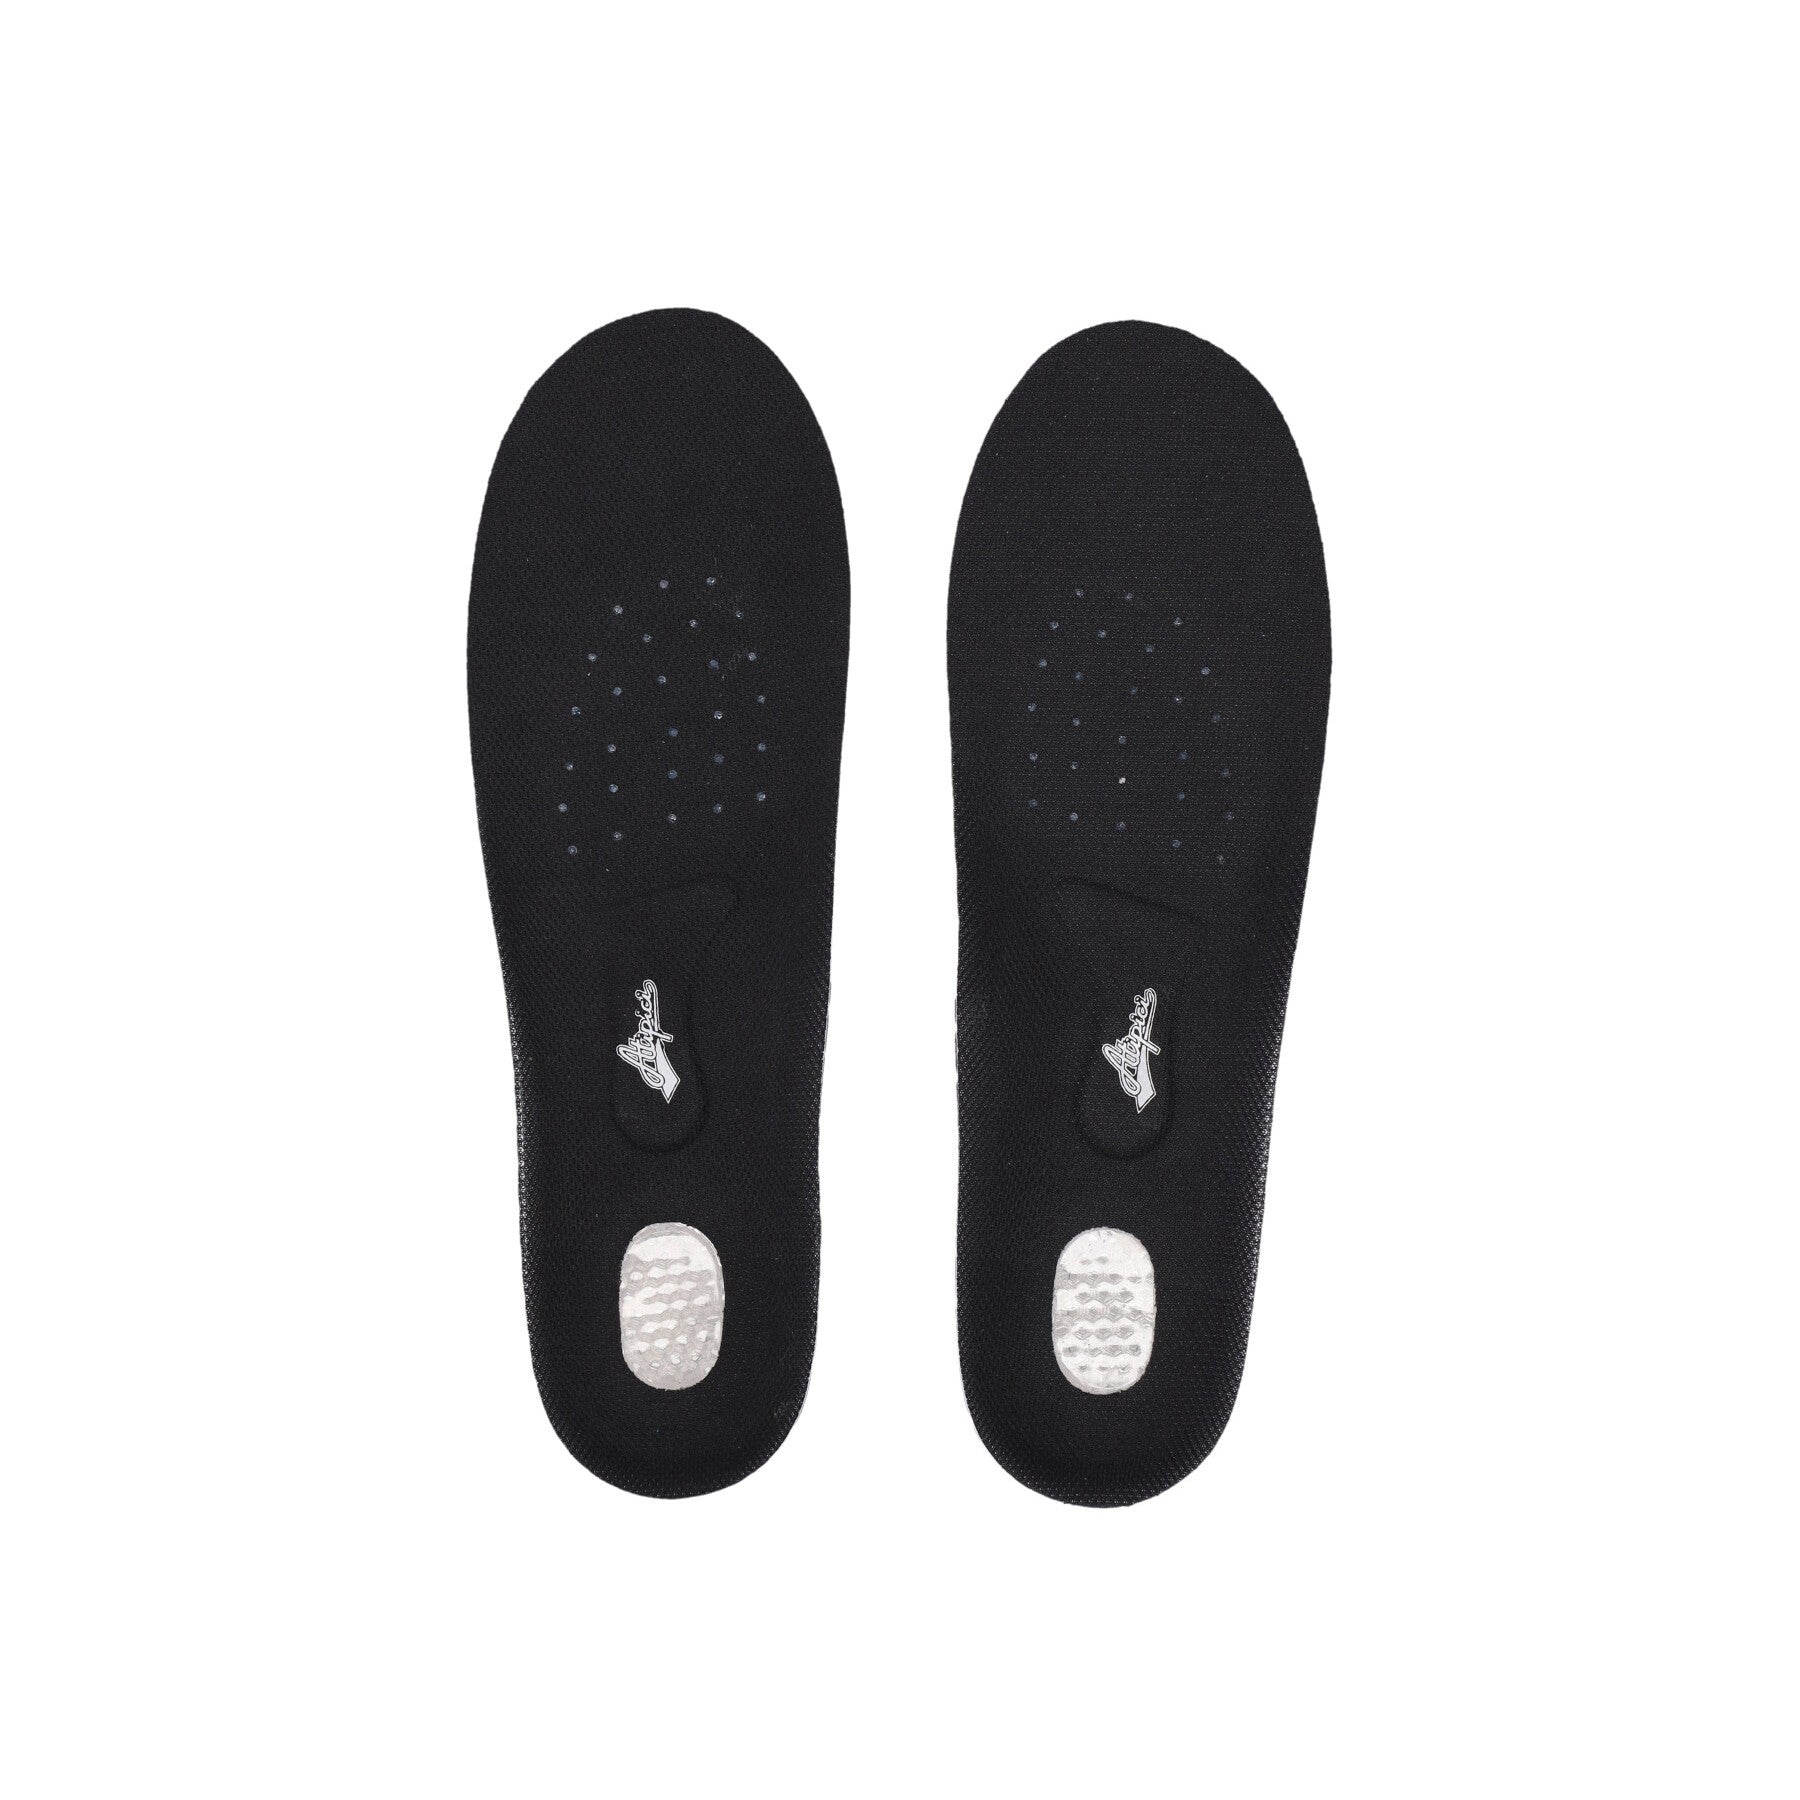 Atipici, Sneakers Insoles Uomo Confort Insoles, Black